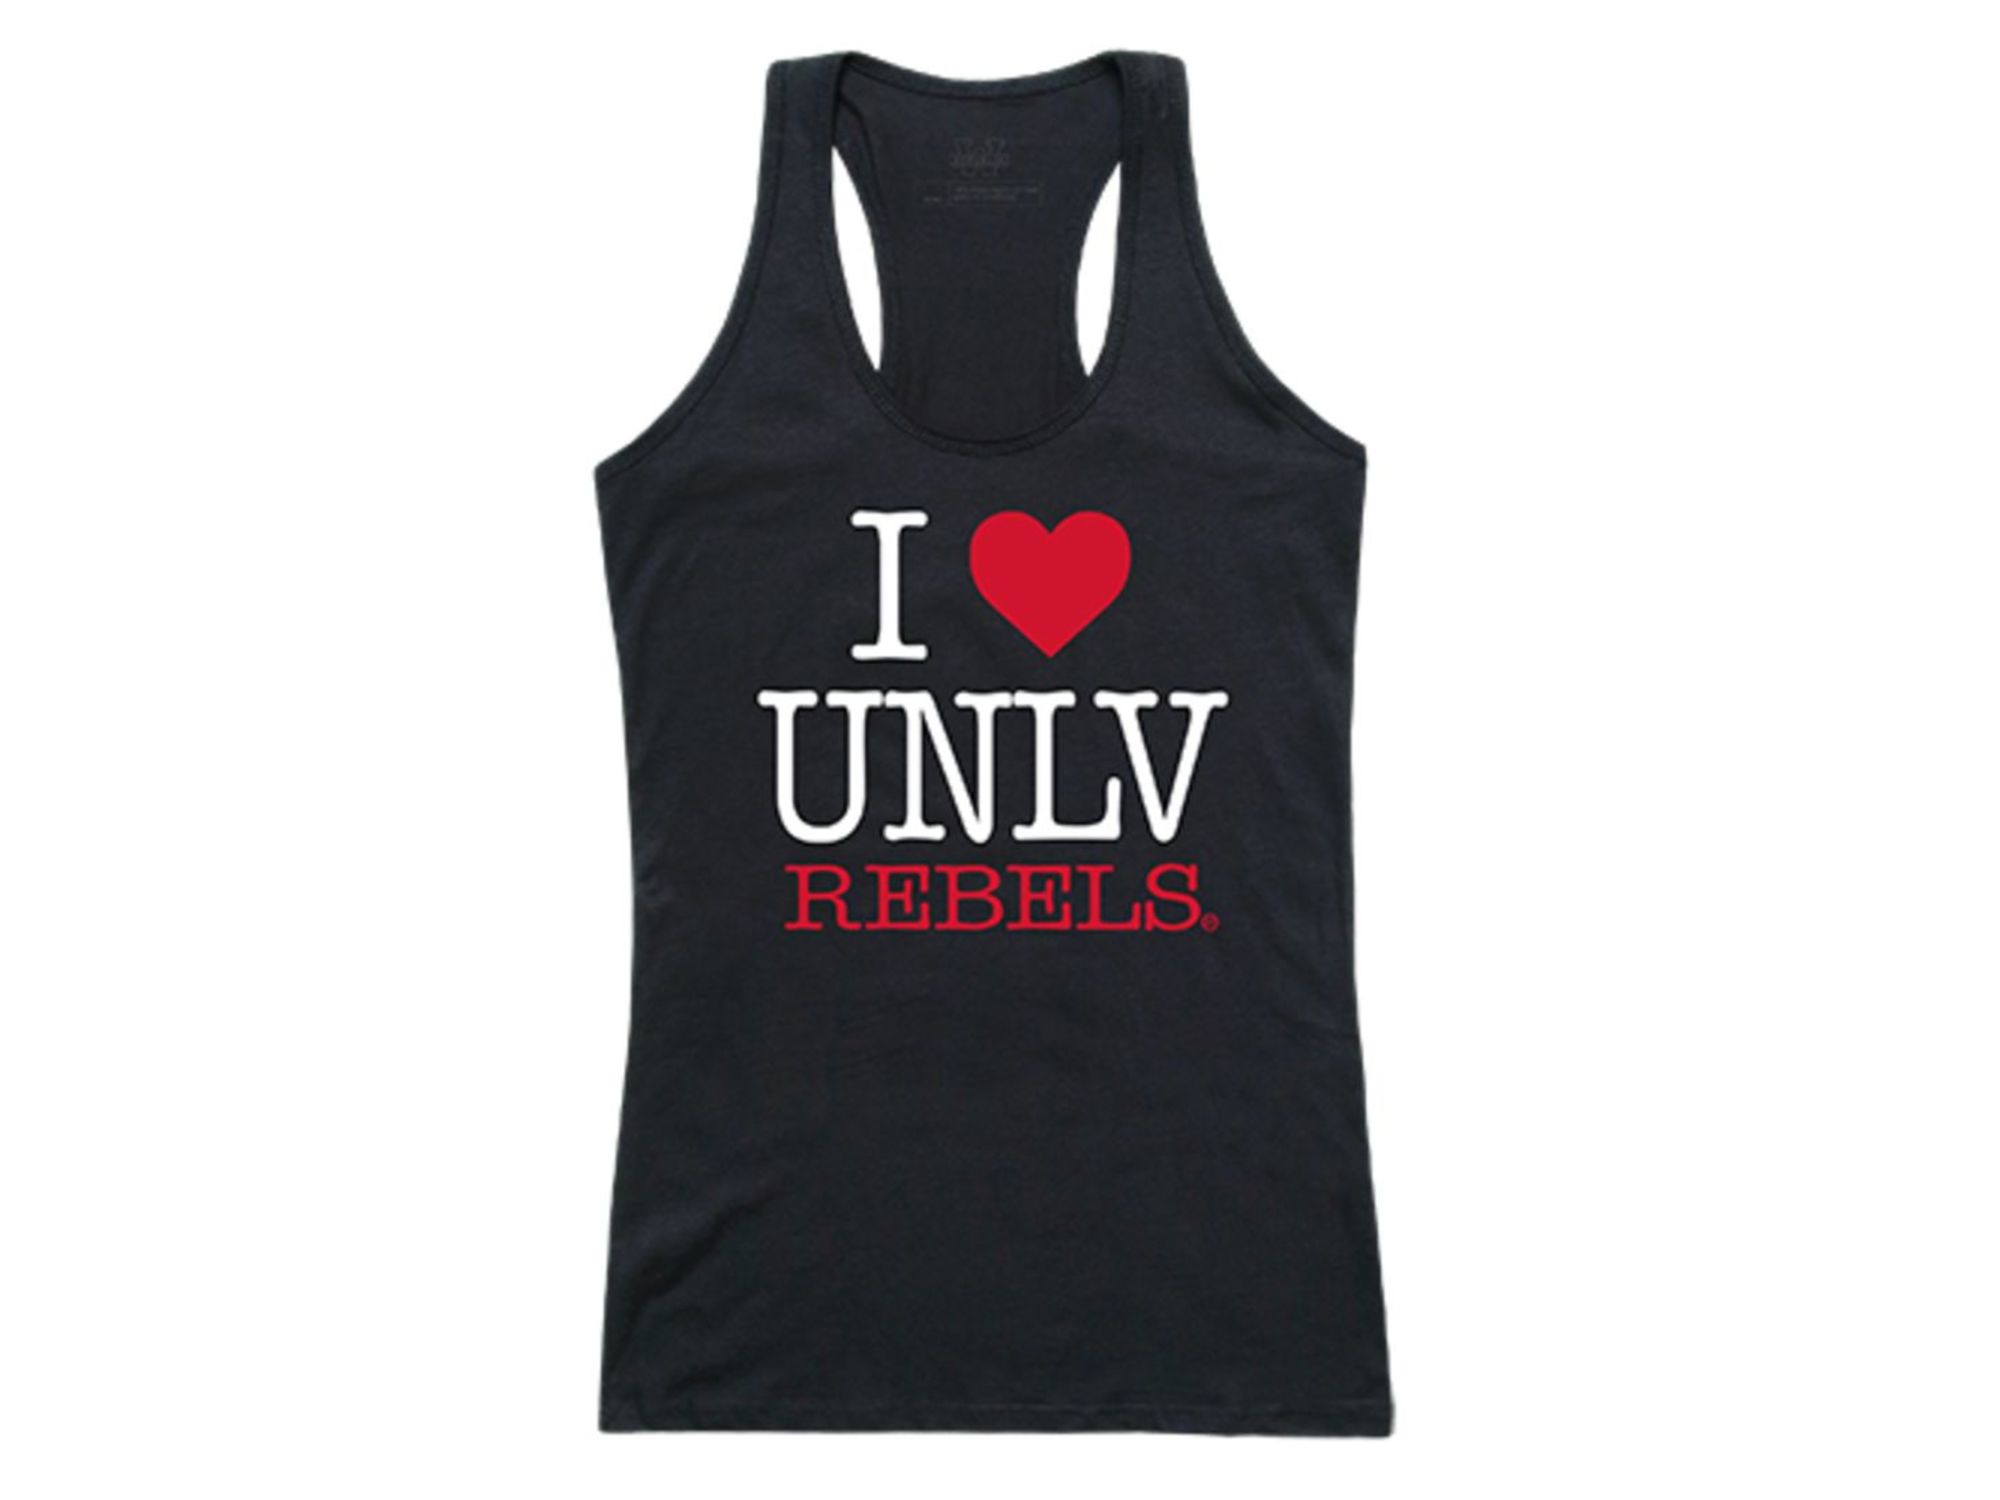 UNLV University of Nevada Las Vegas Rebels Womens Love Tank Top T-Shirt Black - image 1 of 1